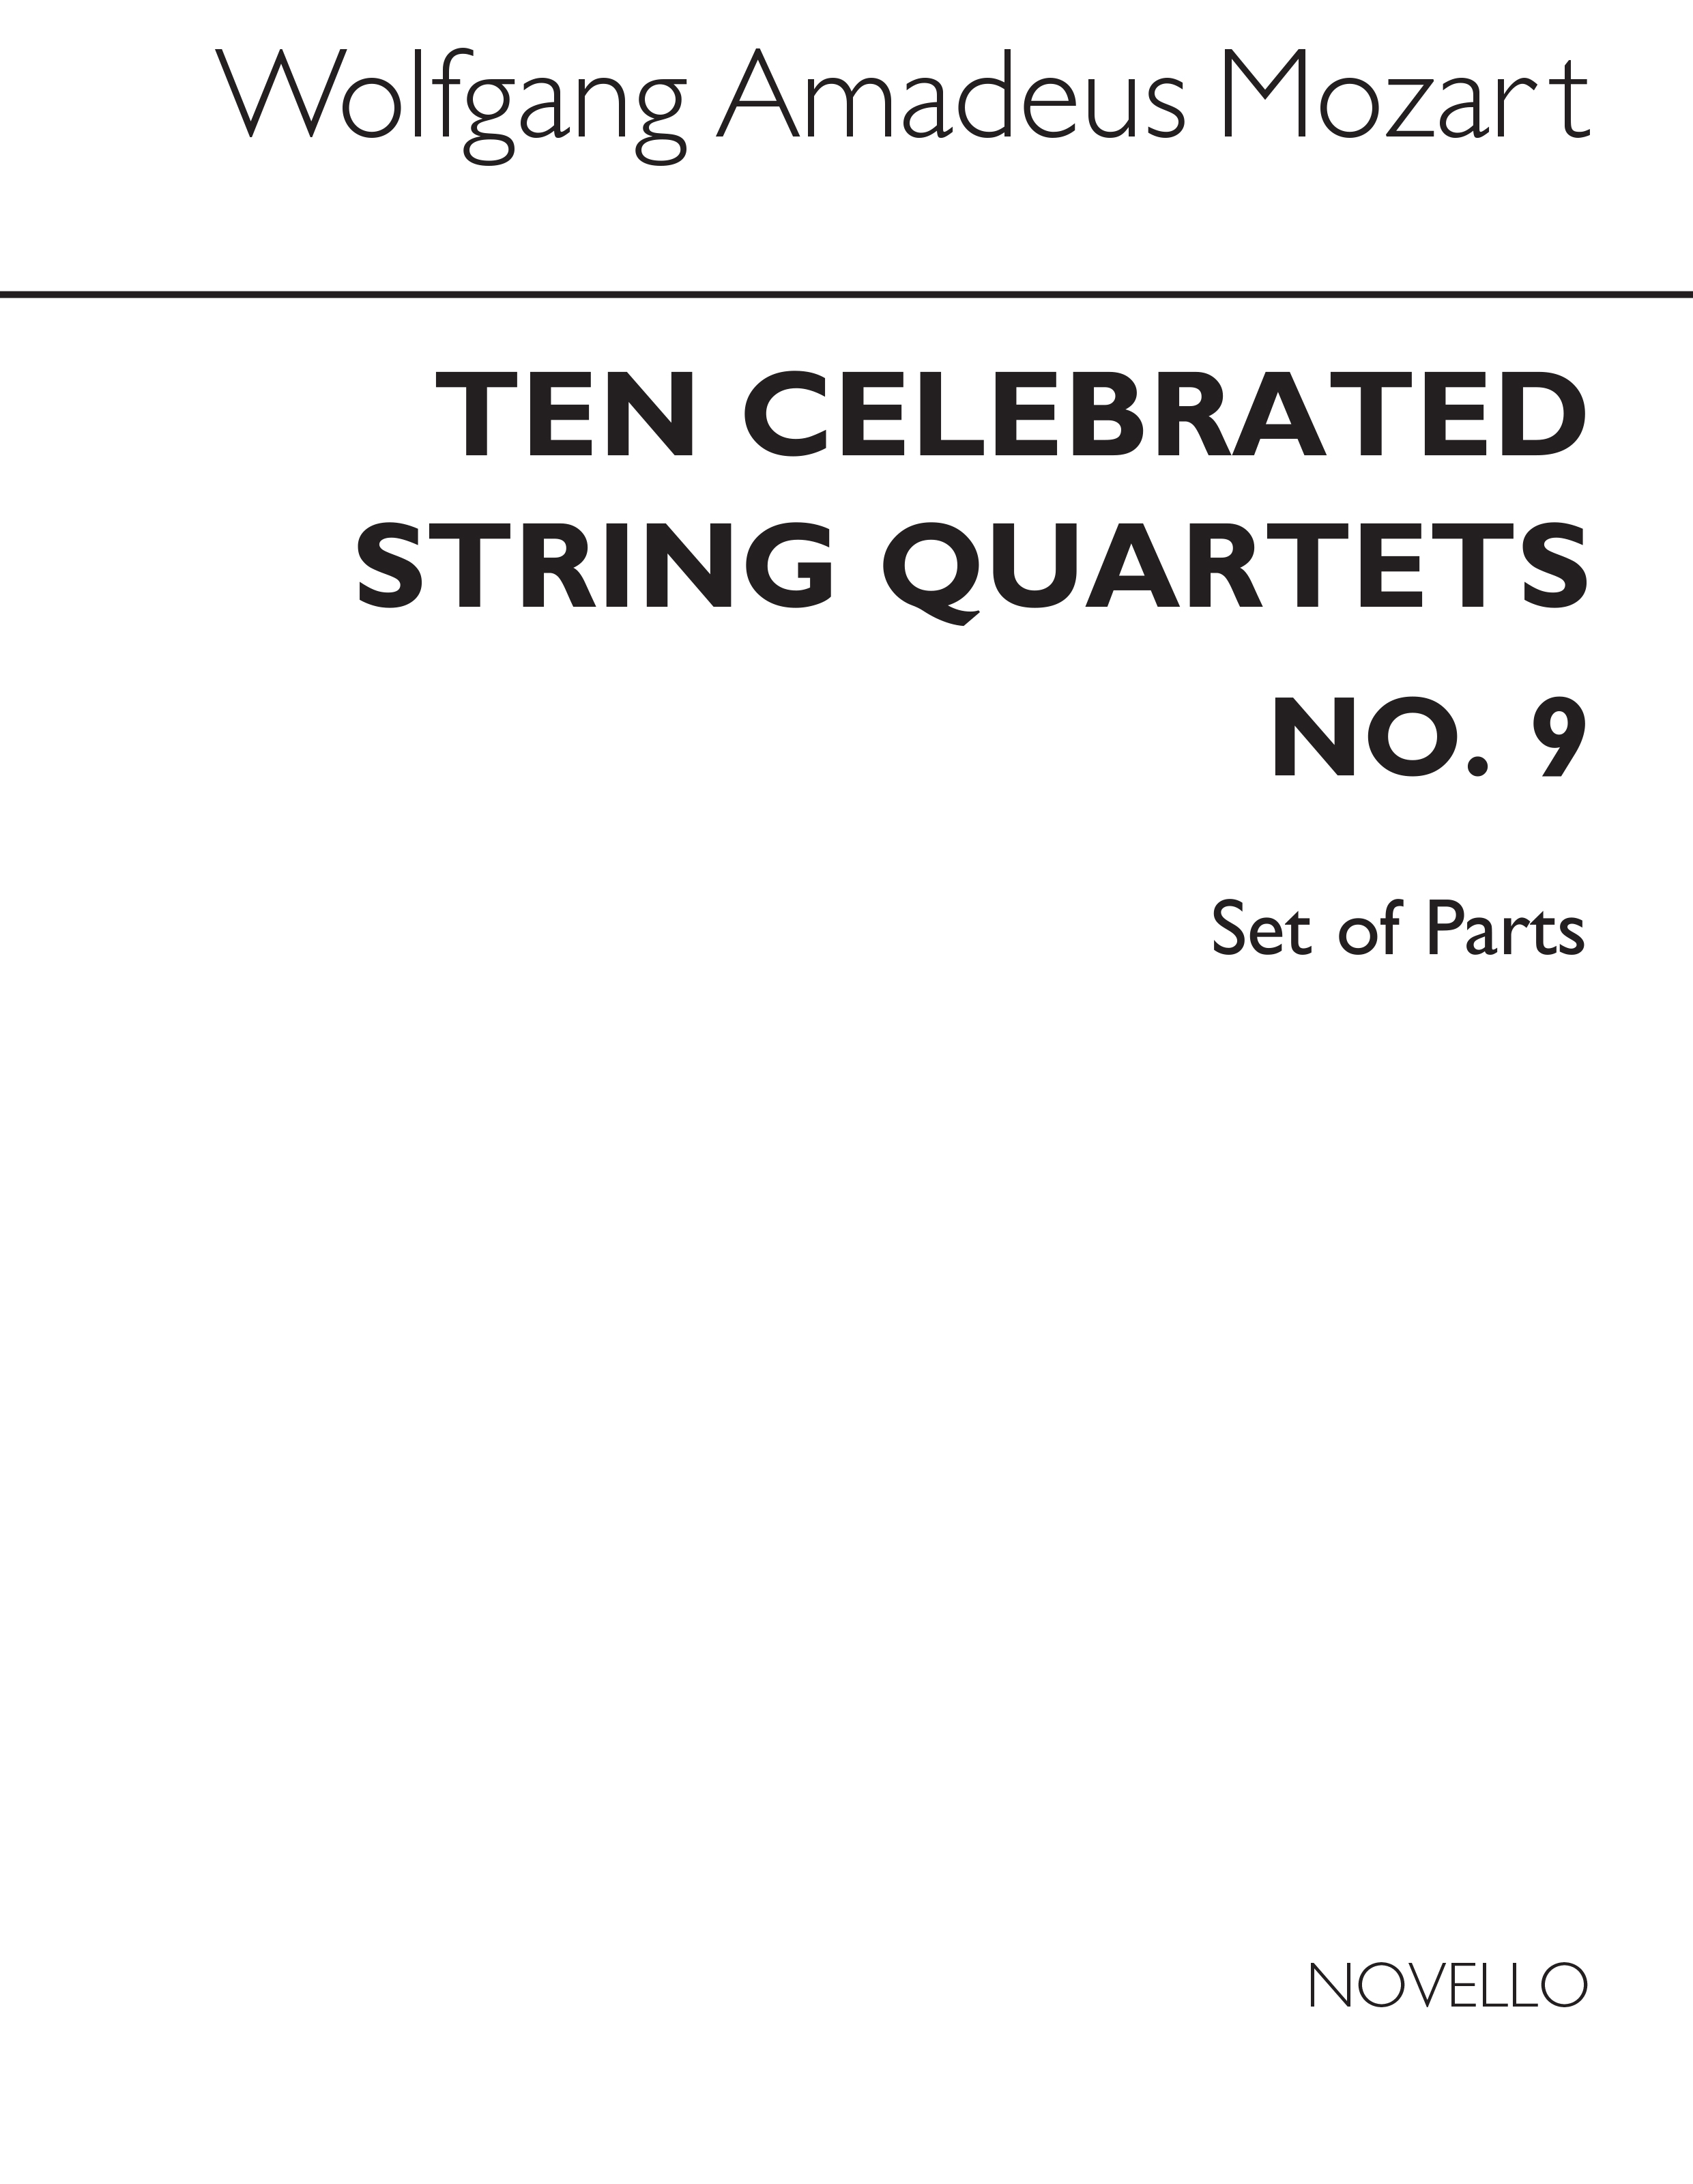 Wolfgang Amadeus Mozart: Ten Celebrated String Quartets No.9 Parts (K.589):